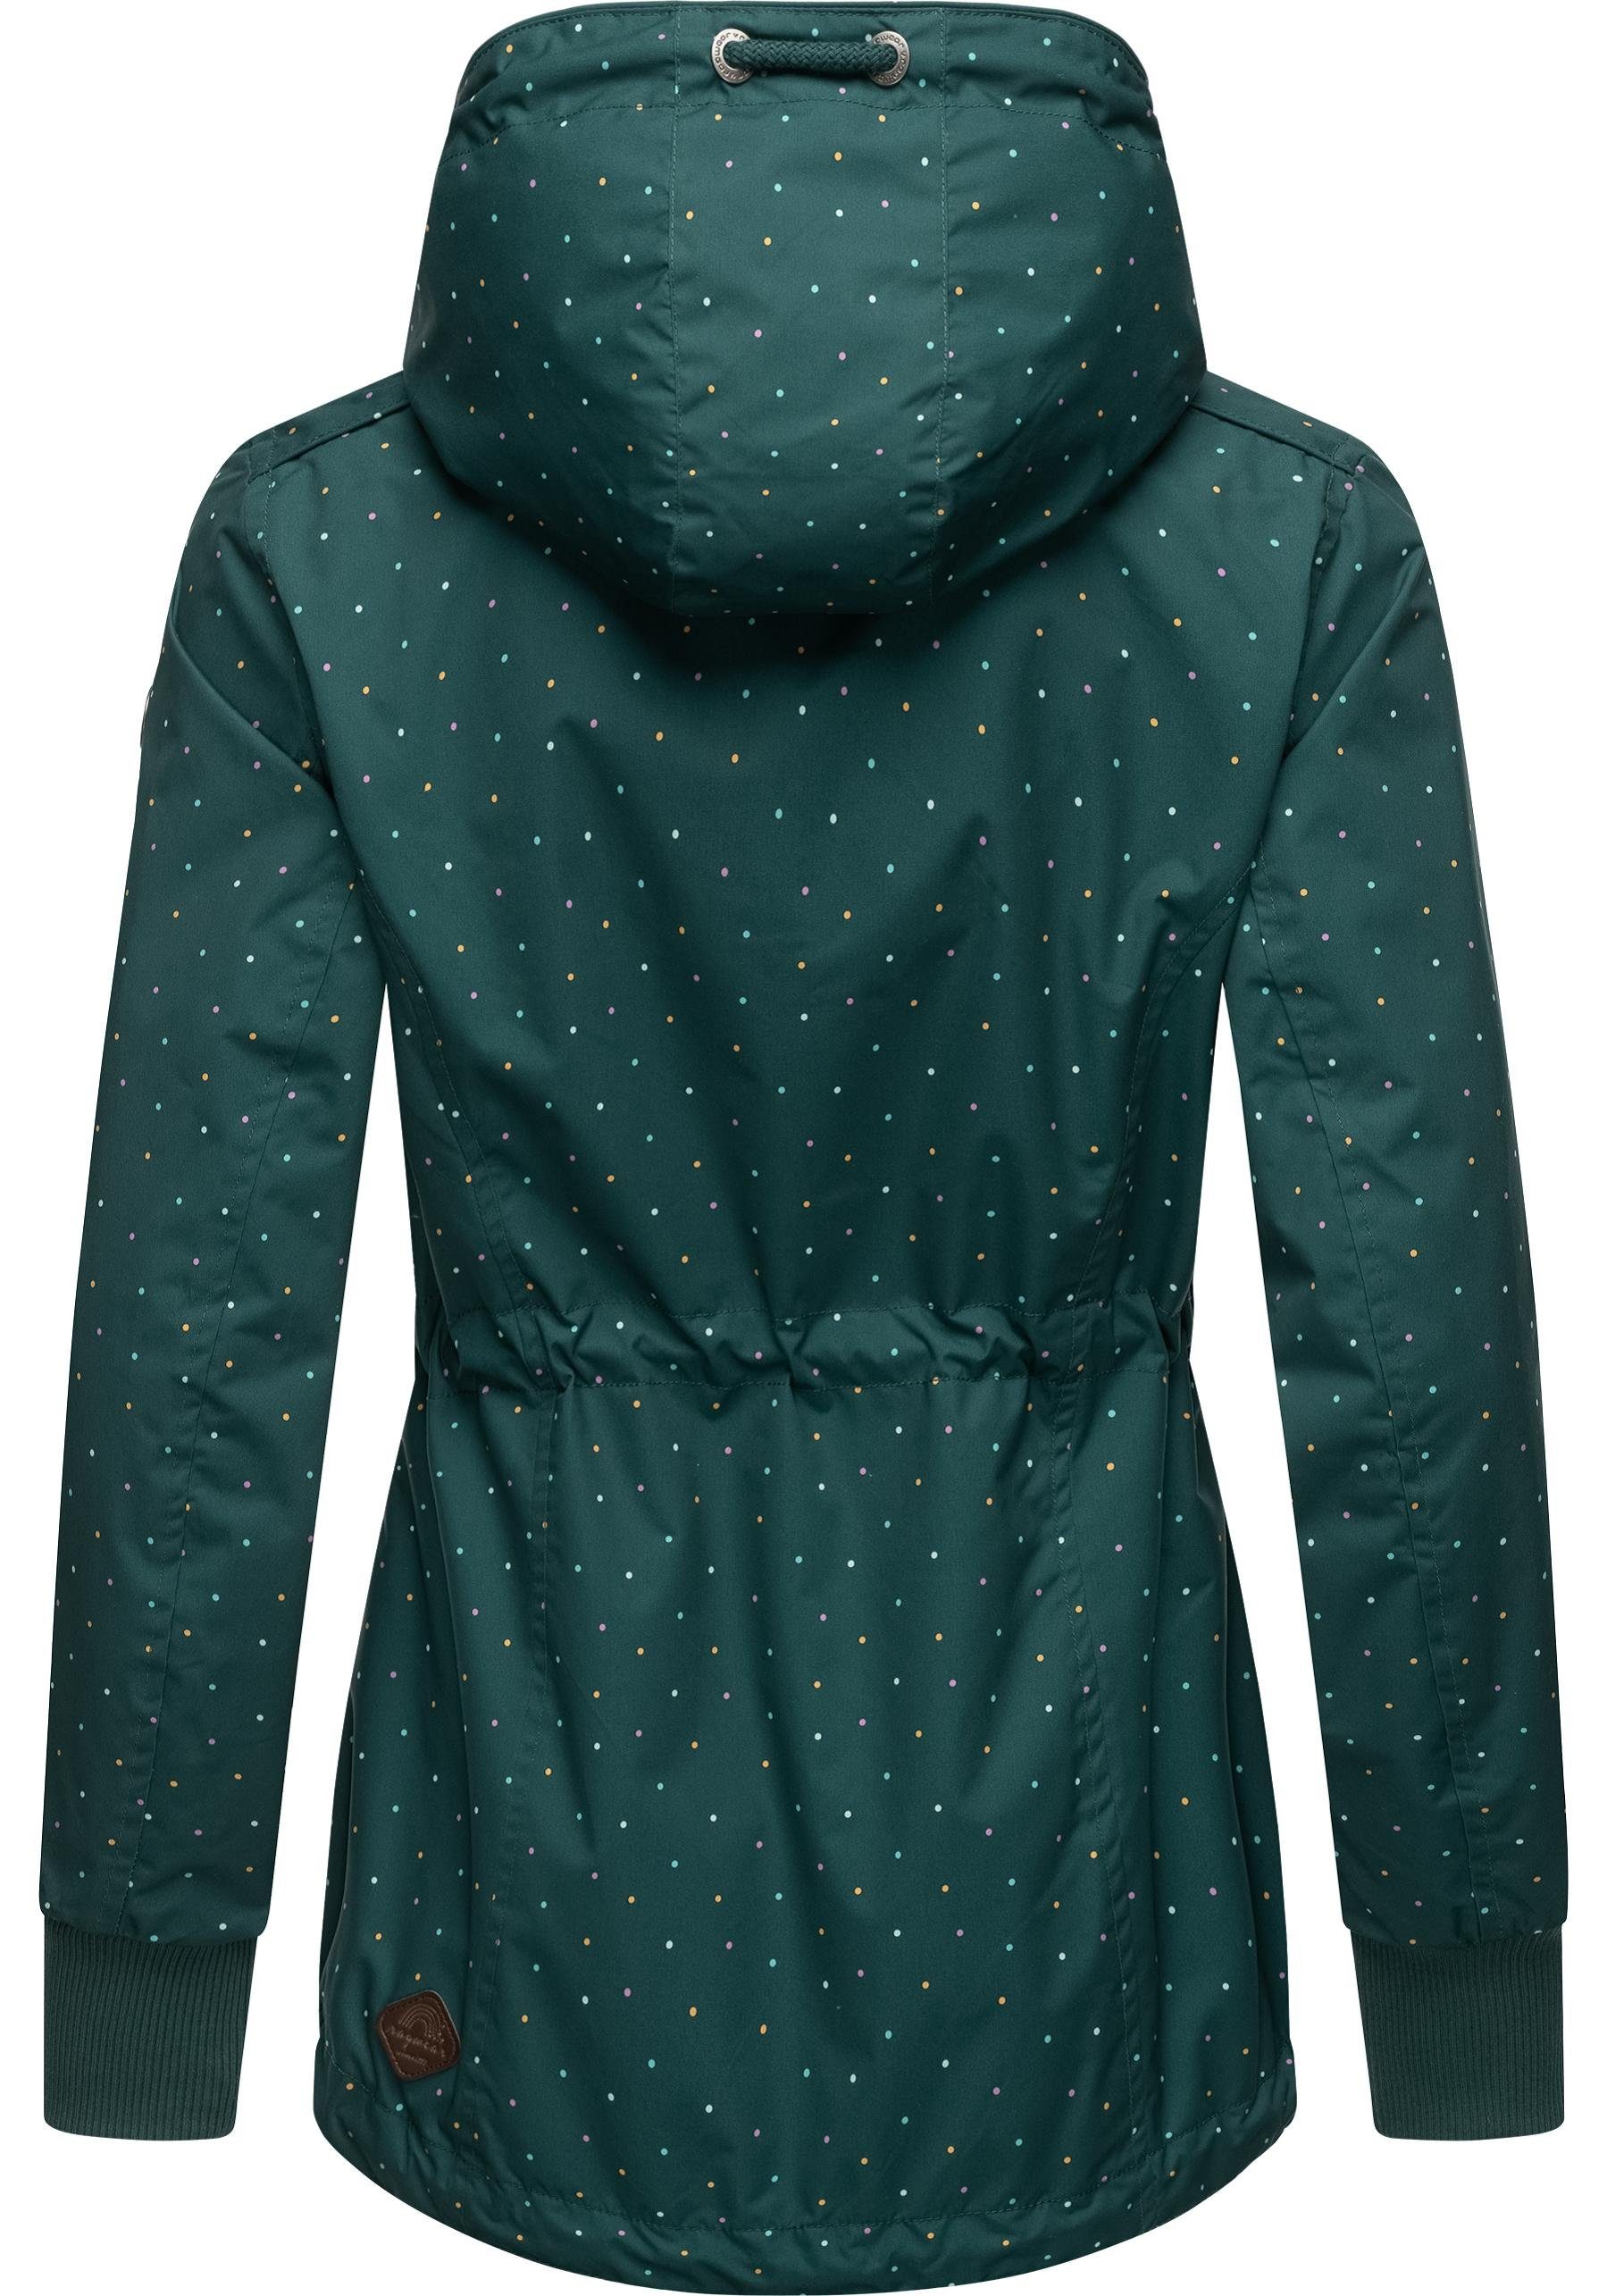 großer Übergangsjacke Outdoorjacke Ragwear Dots Kapuze dunkelgrün mit Danka stylische